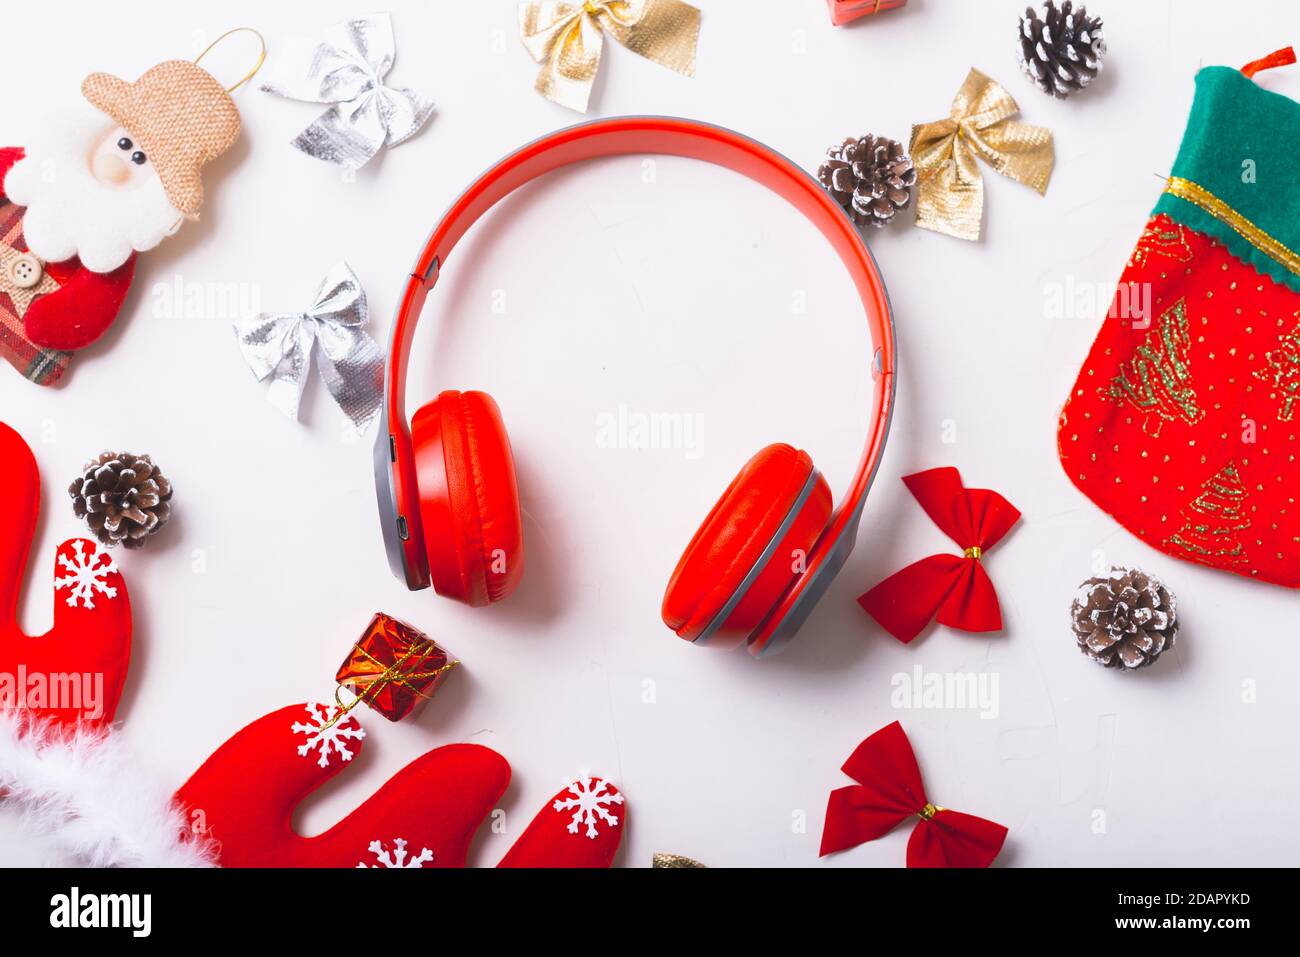 Nuove cuffie rosse tra decorazioni natalizie Foto stock - Alamy